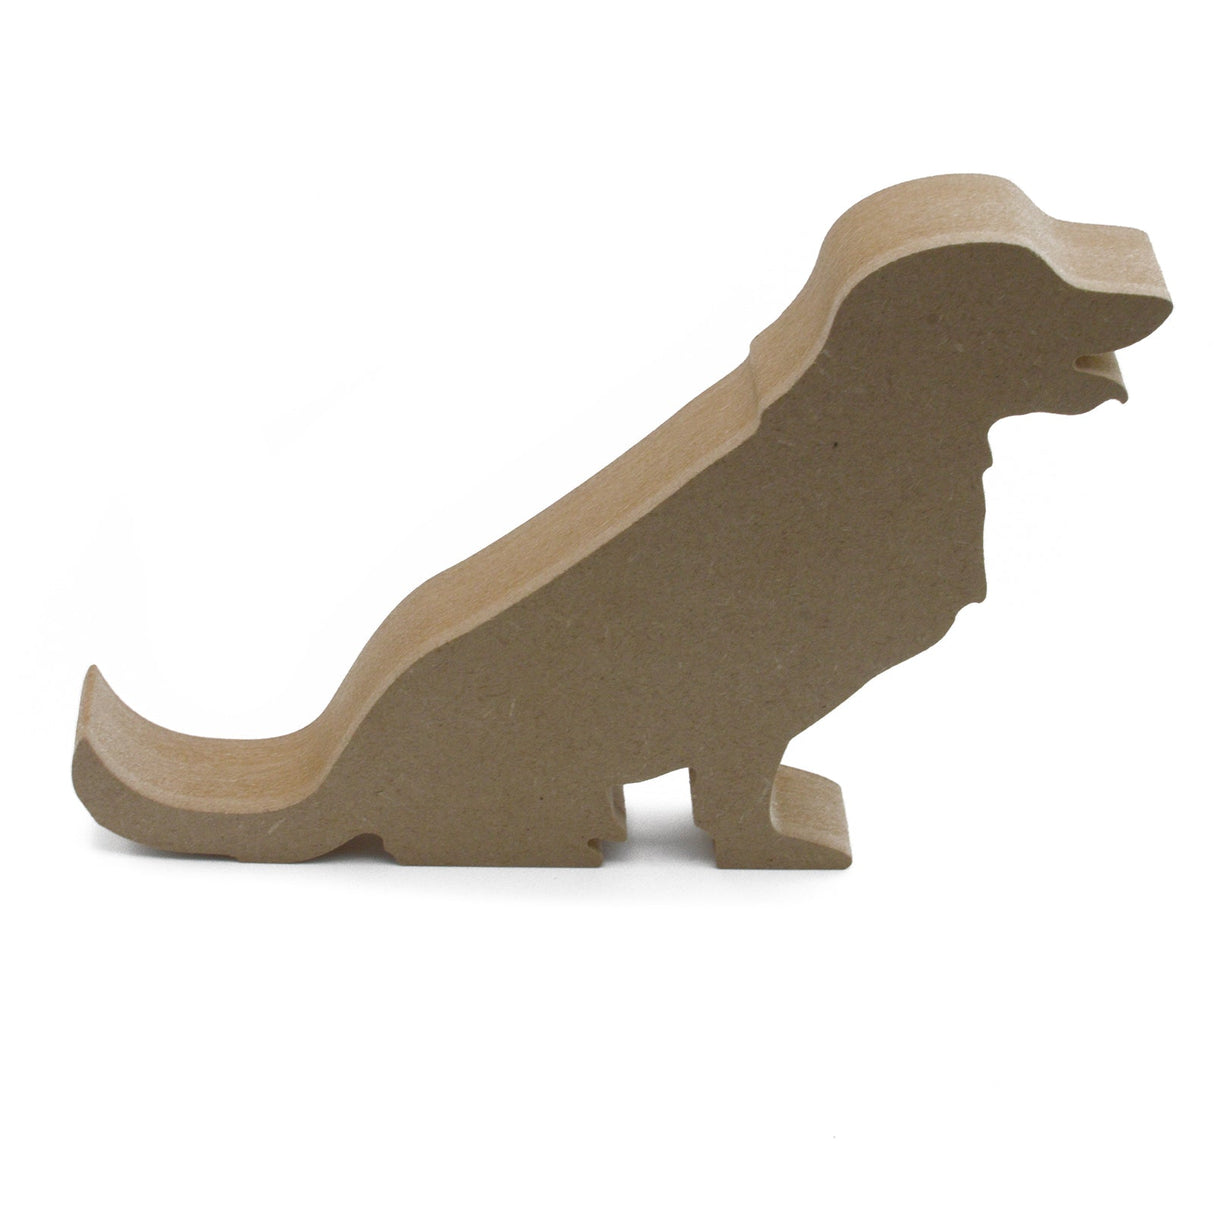 Freestanding Golden Retriever Dog Shapes - Laserworksuk